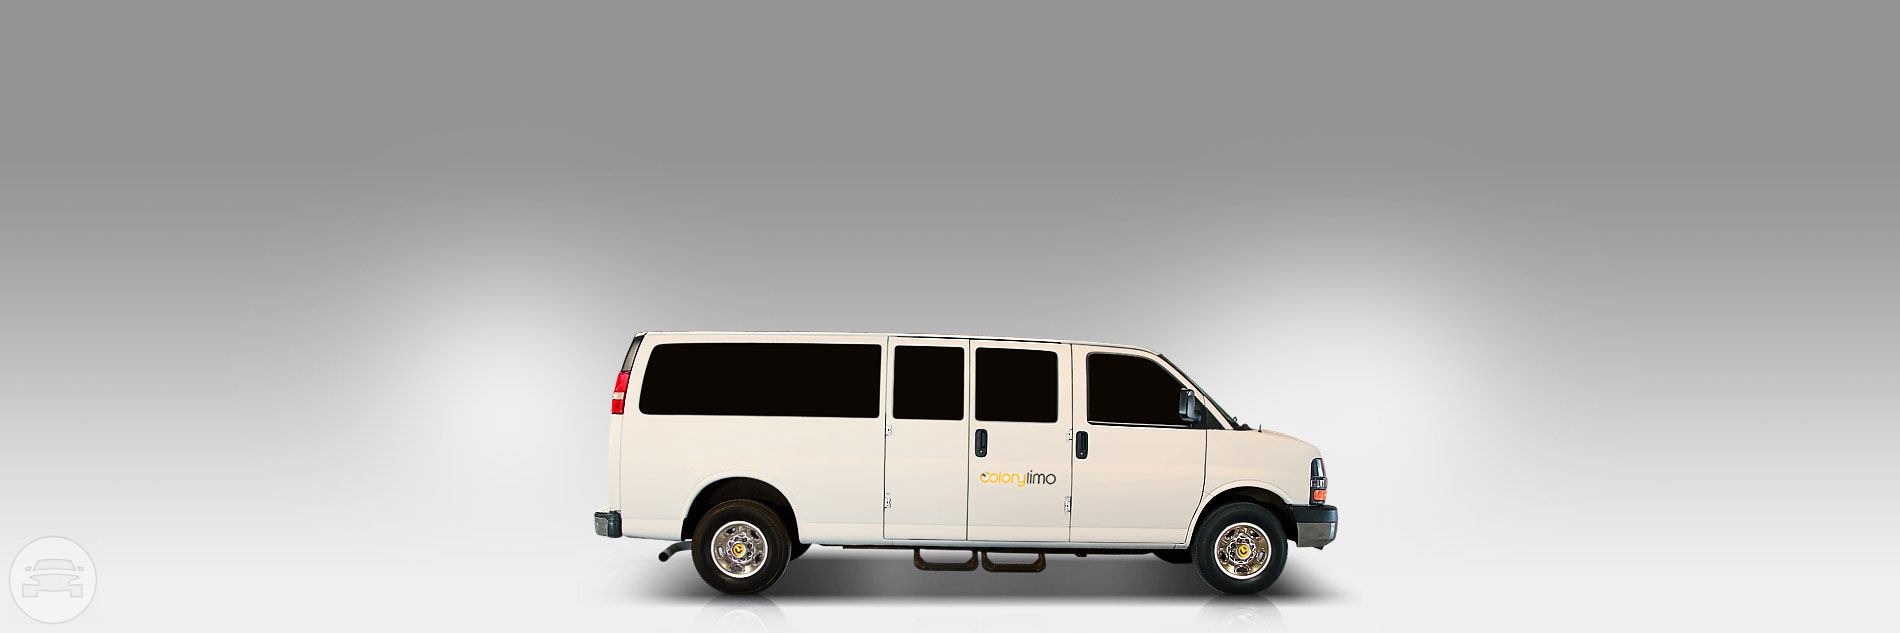 Economy Passenger Van
Van /
Missouri City, TX

 / Hourly $0.00
